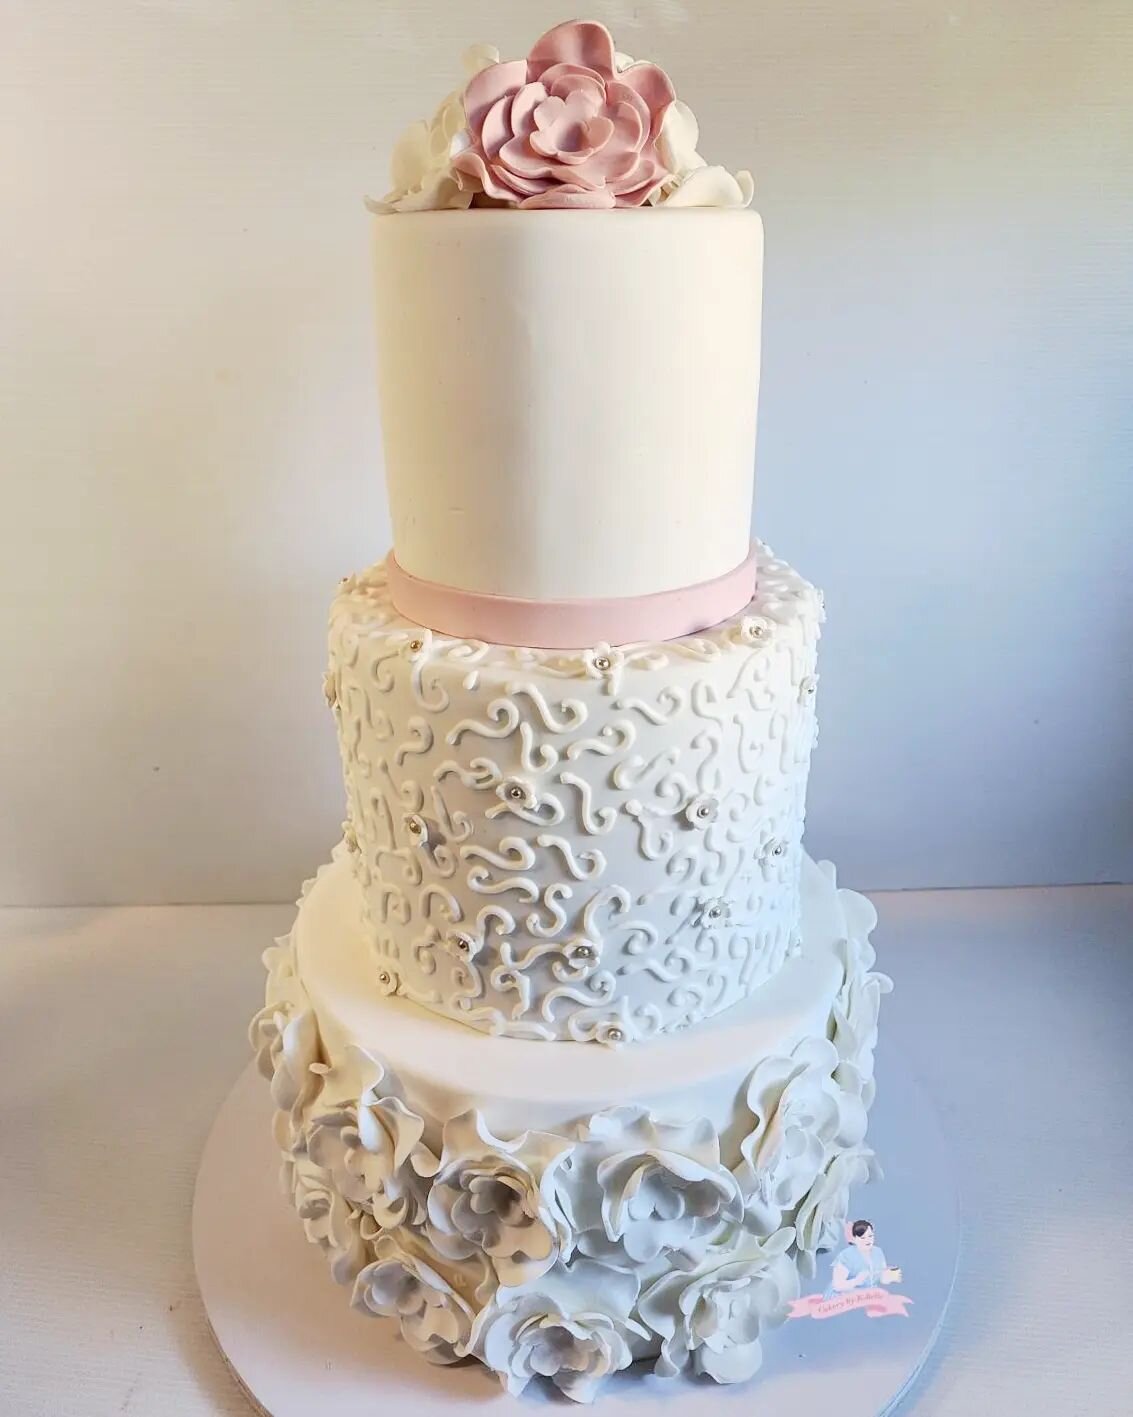 A very traditional design for this wedding cake sent out to sea! 

Venue pics aboard @starship_group

#cakerybykbelle #weddingcake #weddingcakessydney #wedding #weddingcakewithflowers #weddingcakes #fondantflowers #weddingcakesofinstagram #royalicing